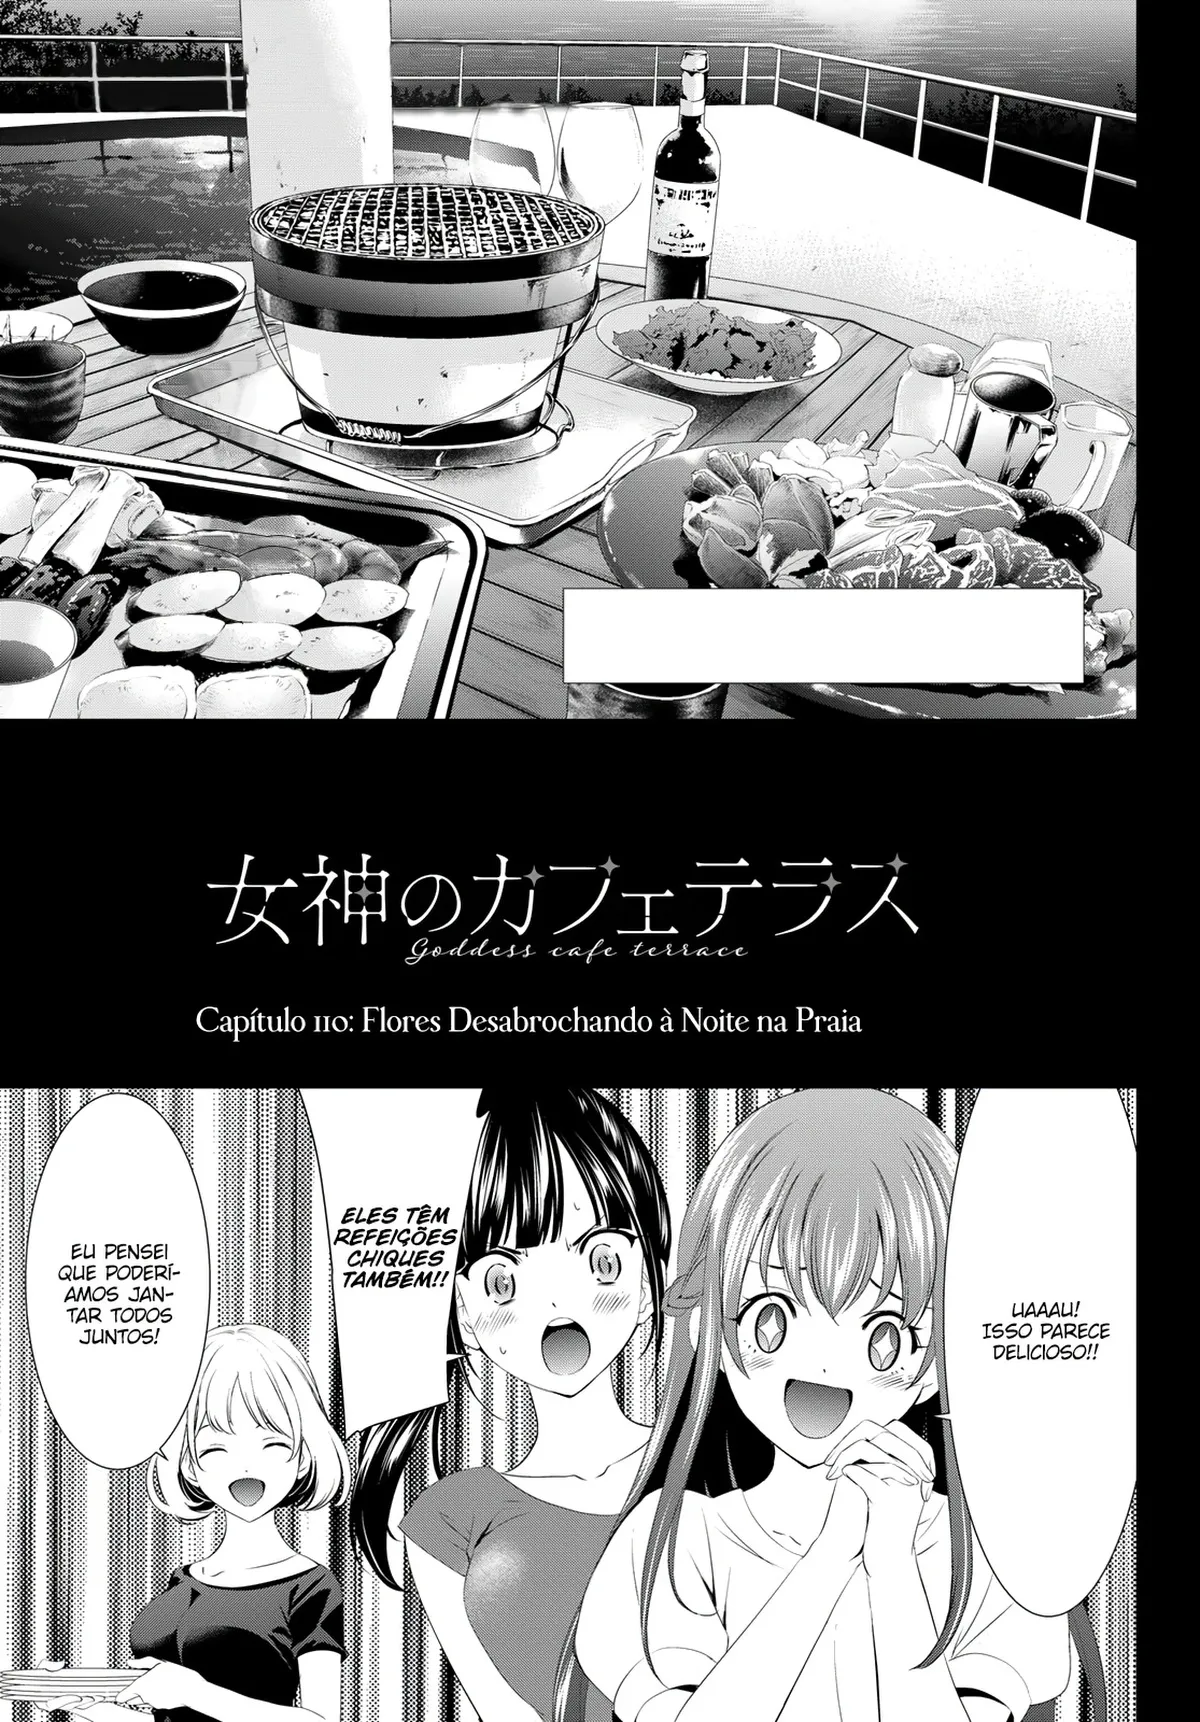 Goddess Cafe Terrace, Chapter 81 - Goddess Cafe Terrace Manga Online